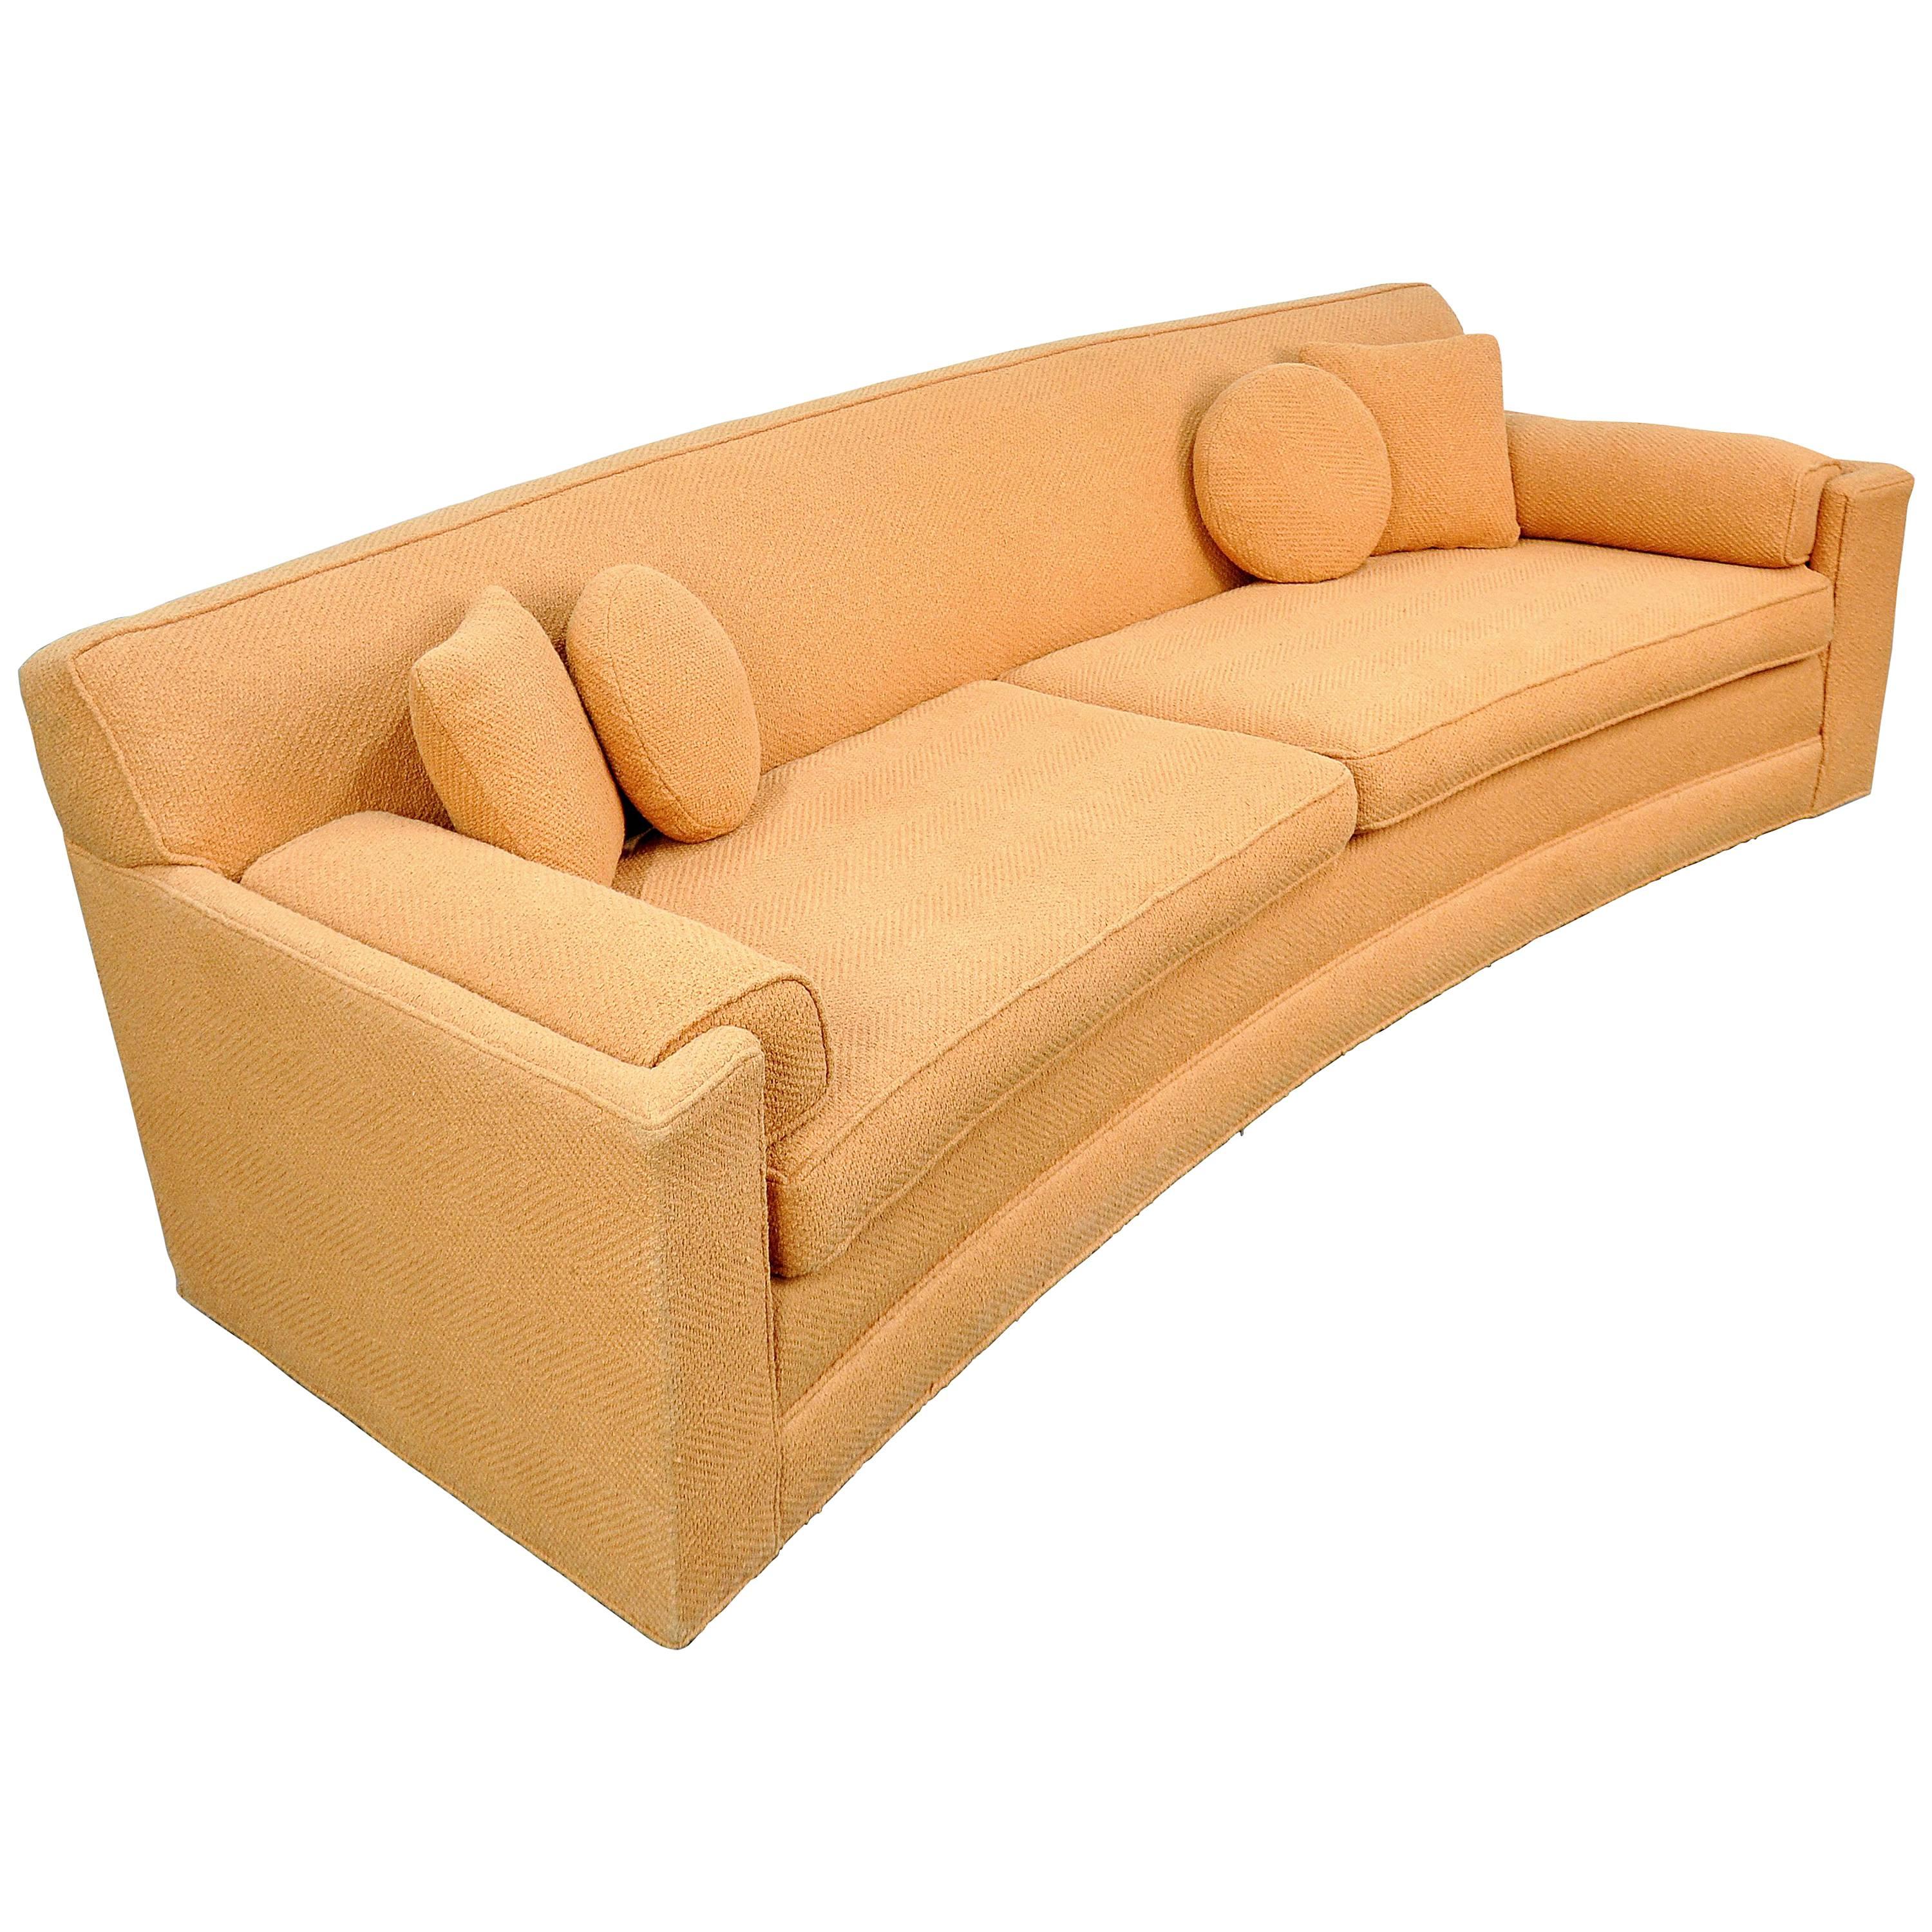 Harvey Probber Curved Sofa